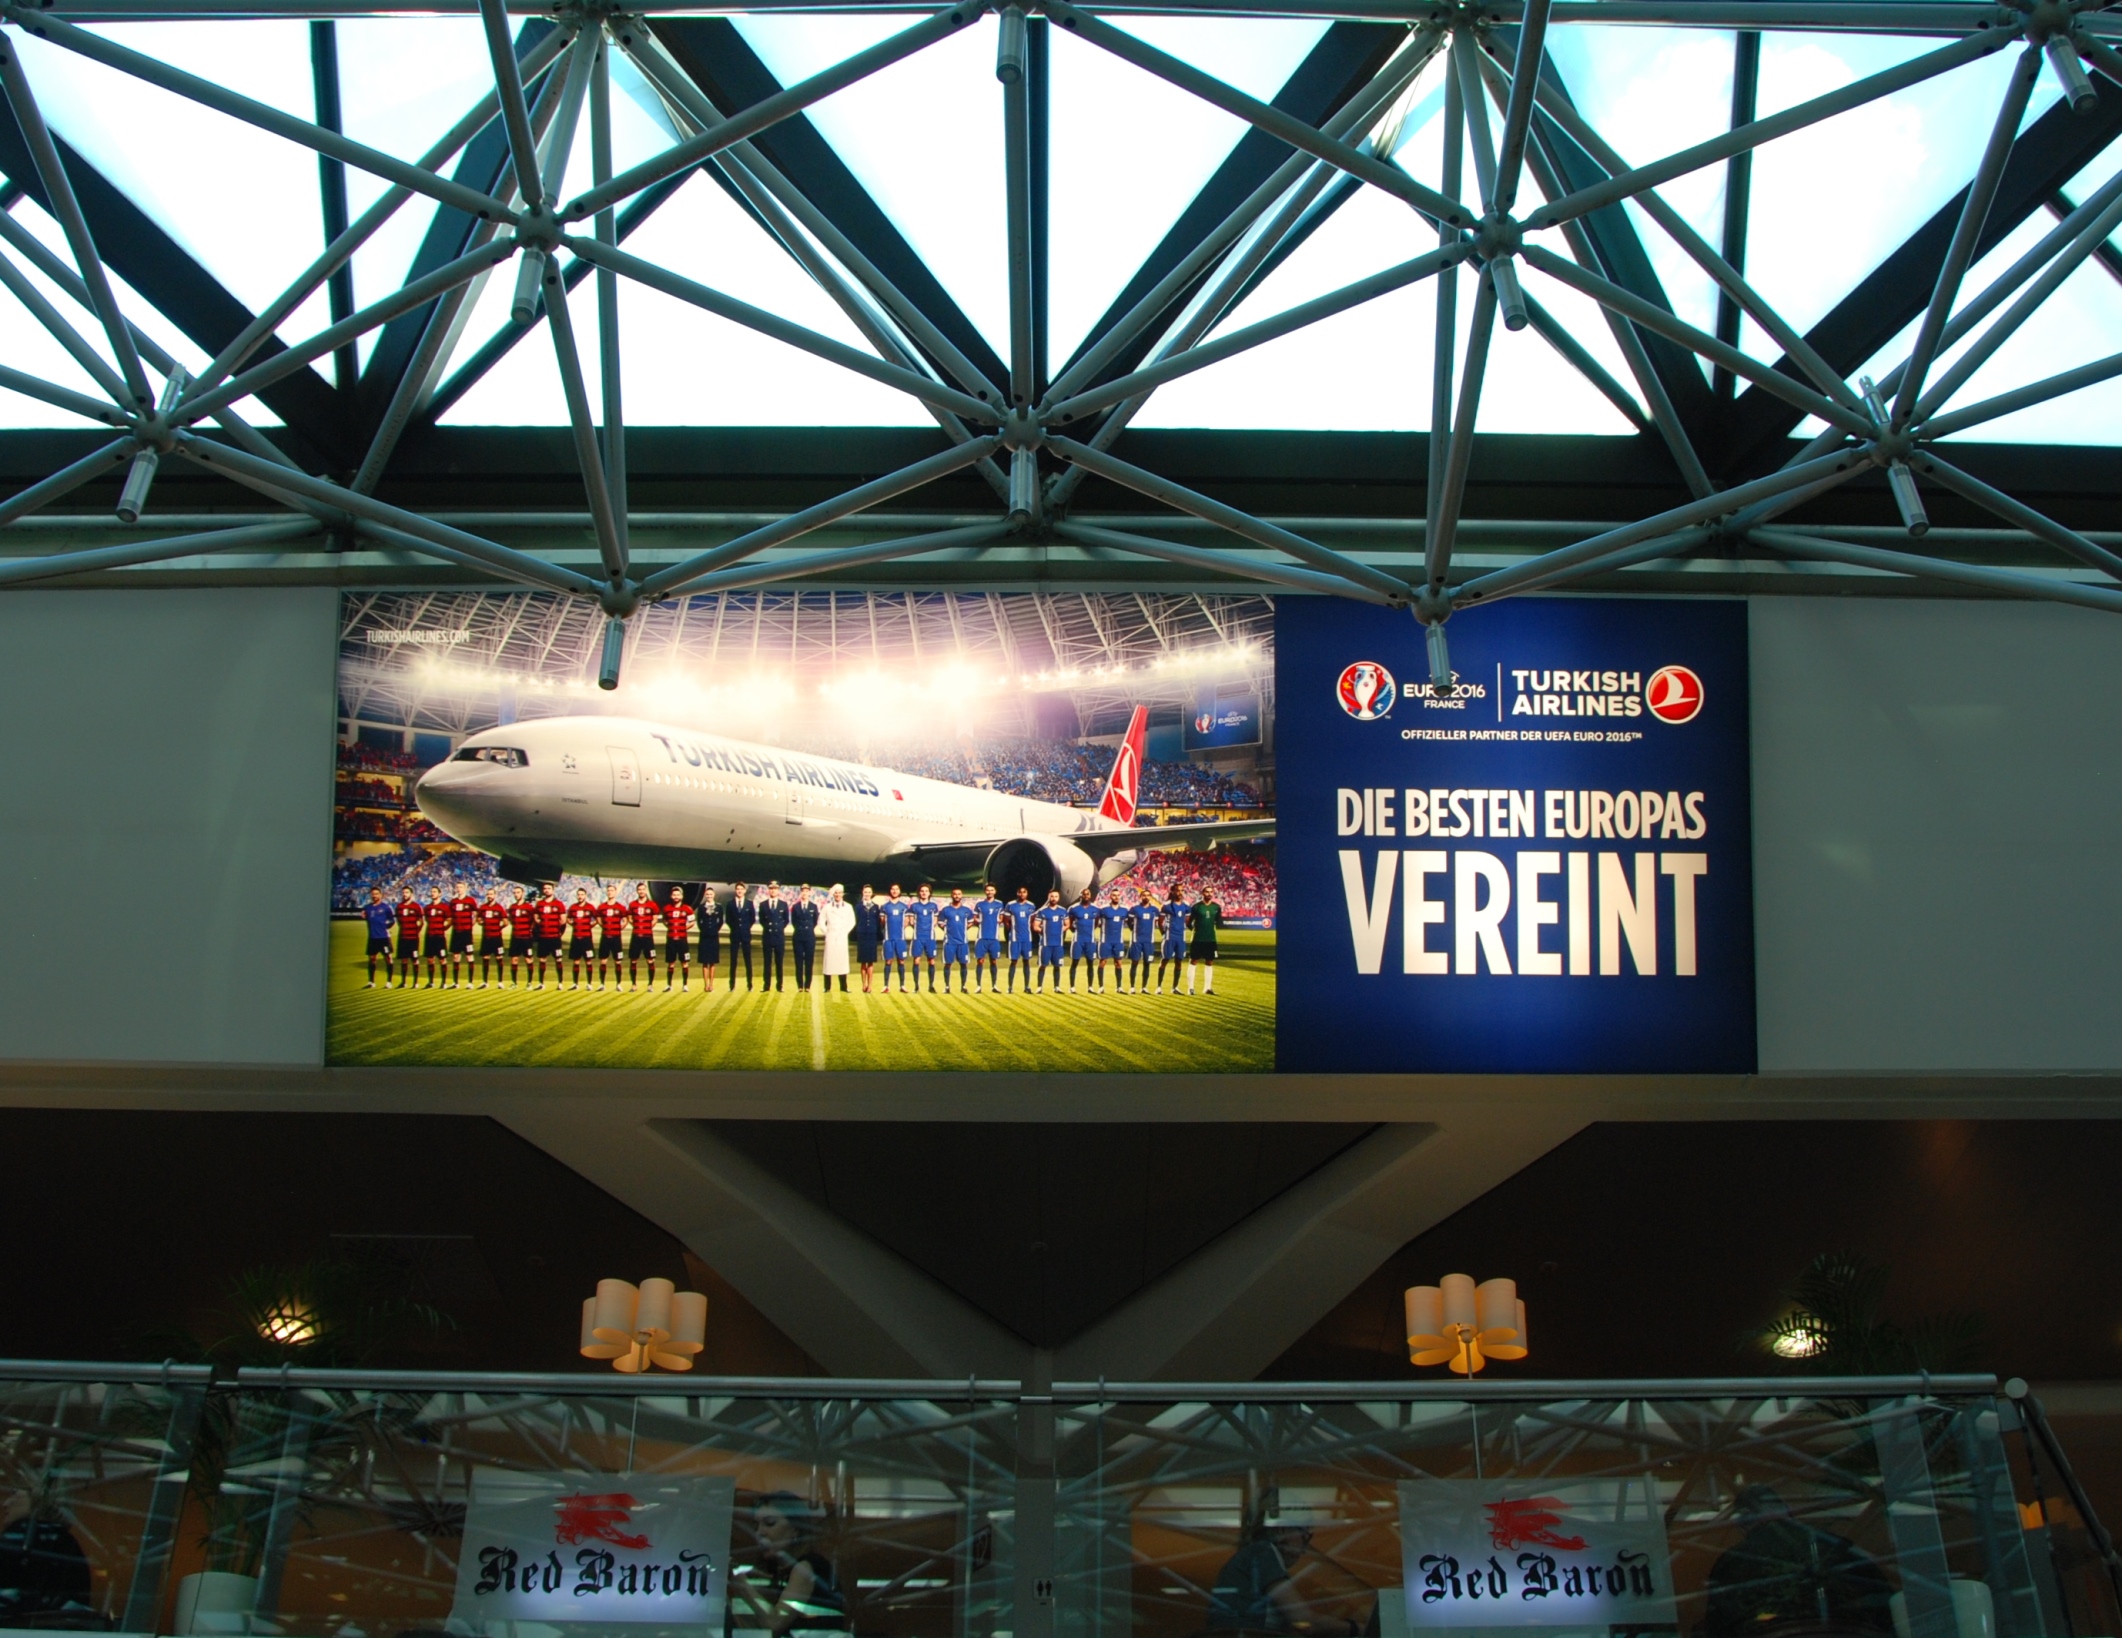 Turkish Airlines Euro 2016 Ad @ Berlin Tegel Airport